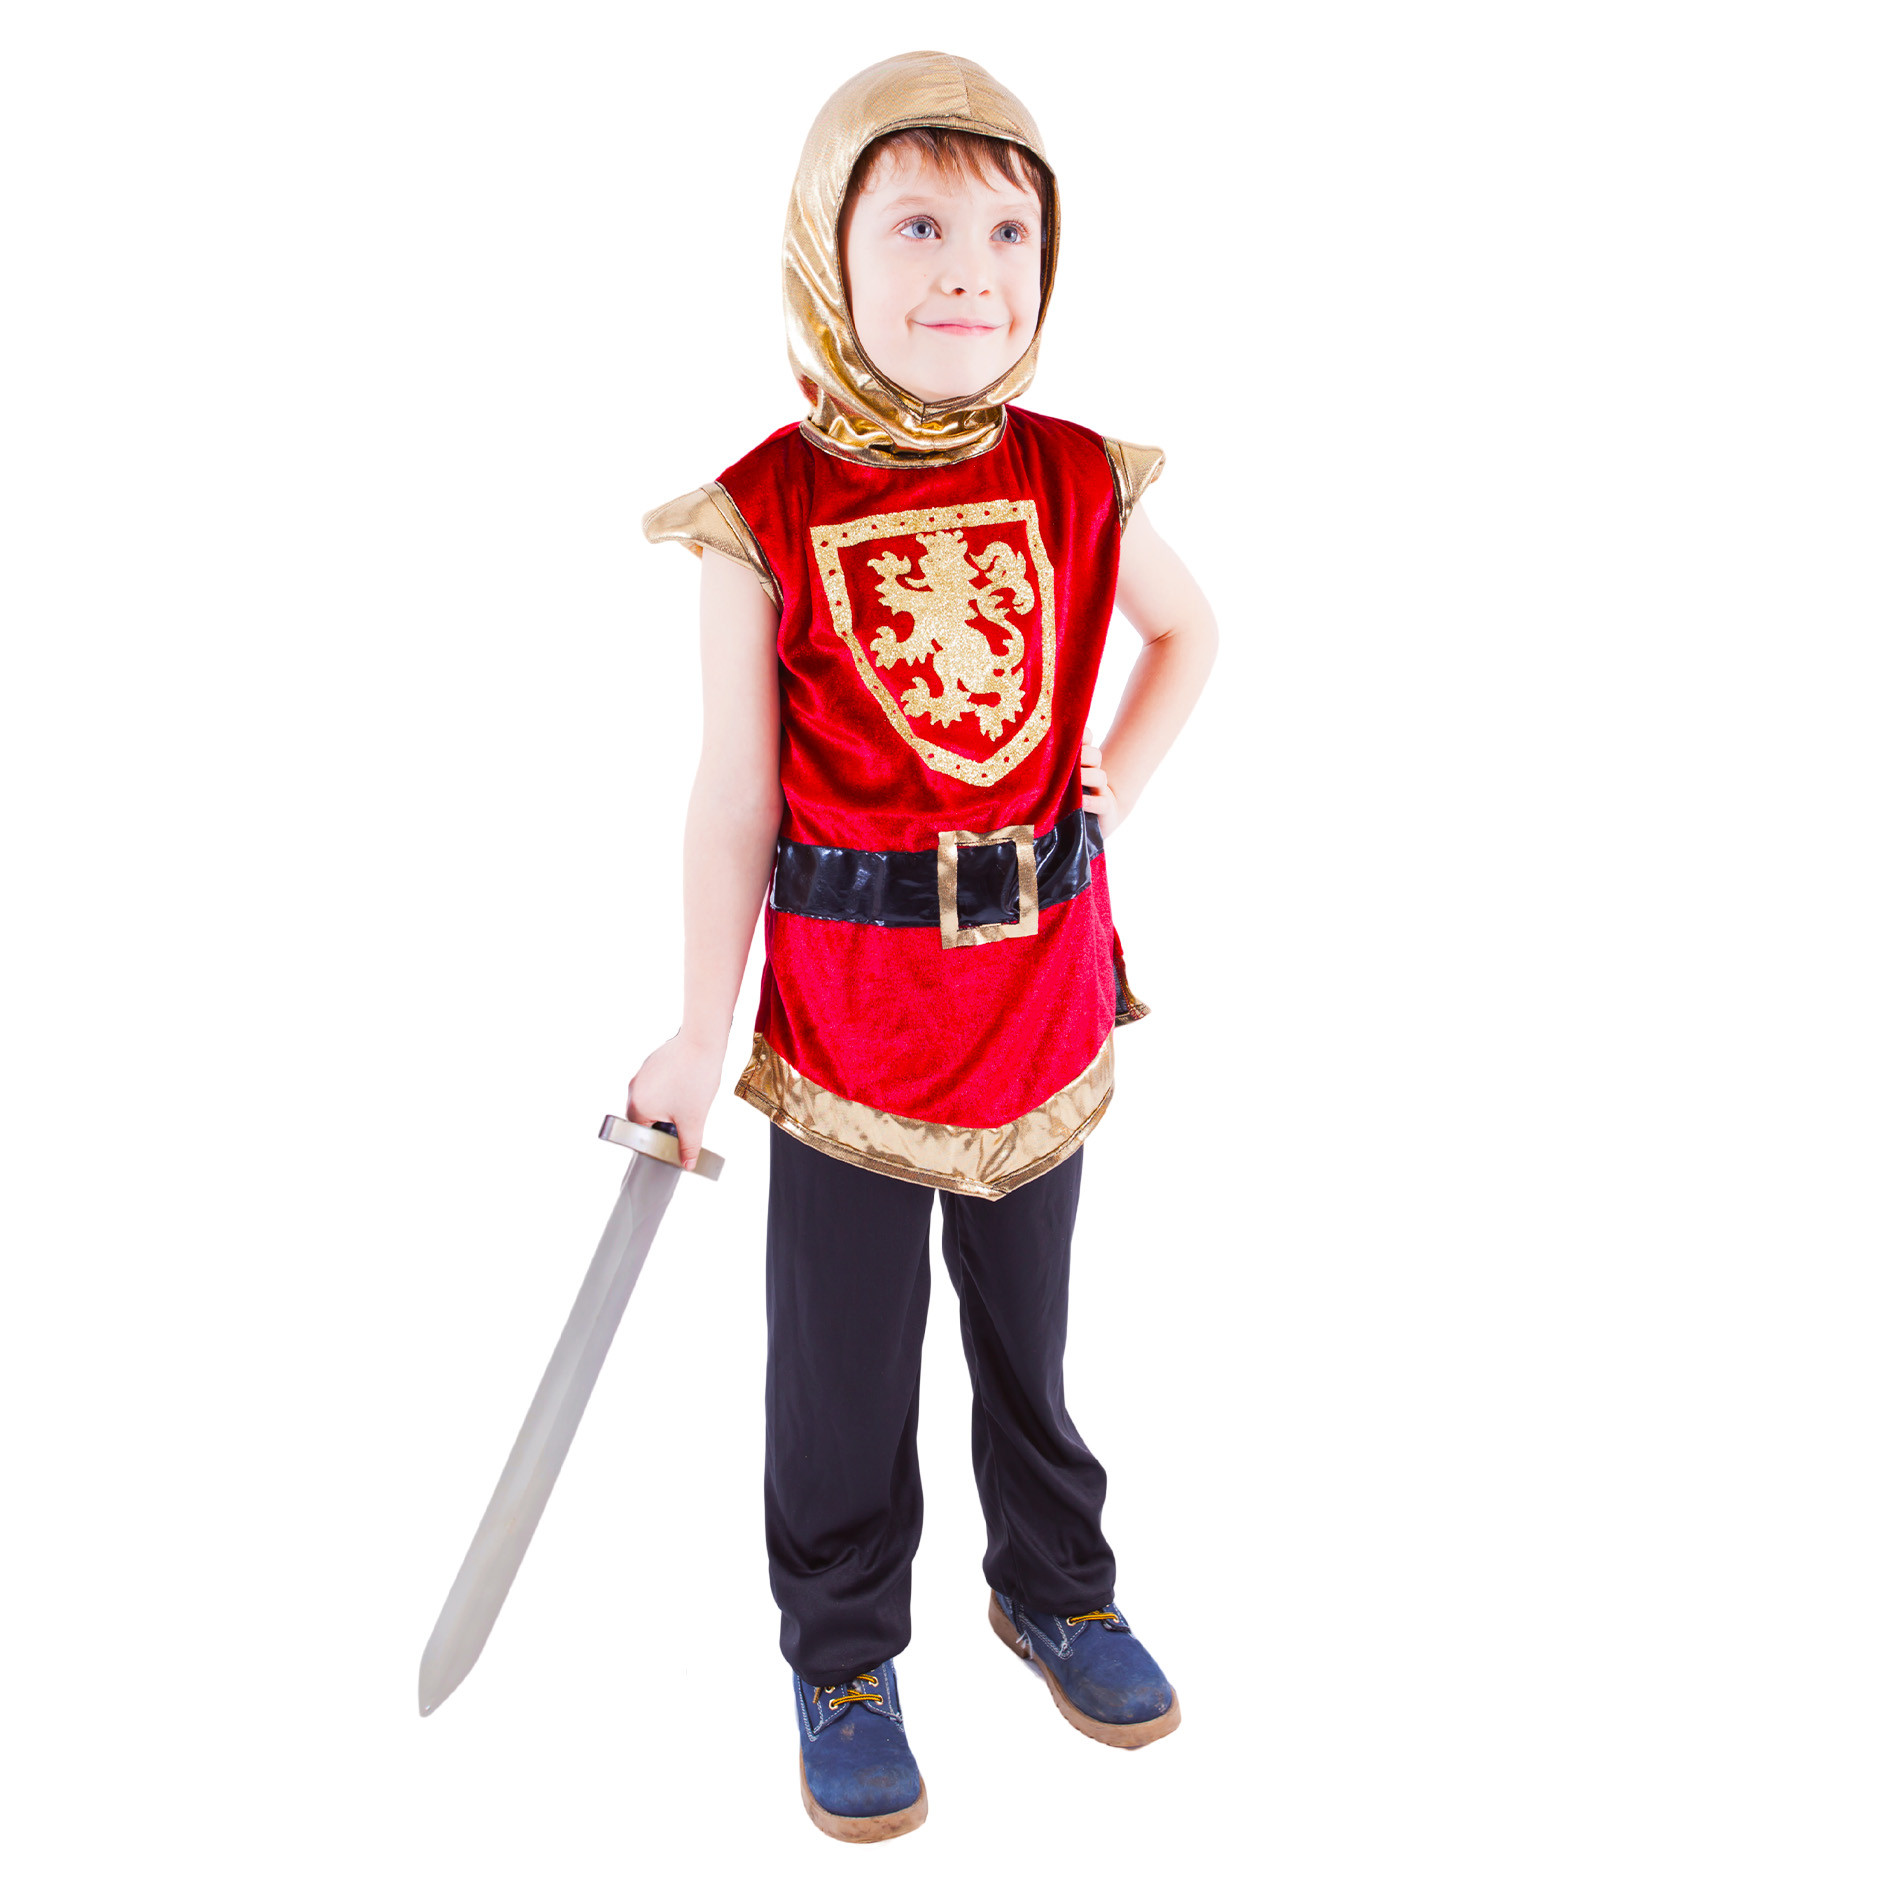 Children costume - red knight (S)